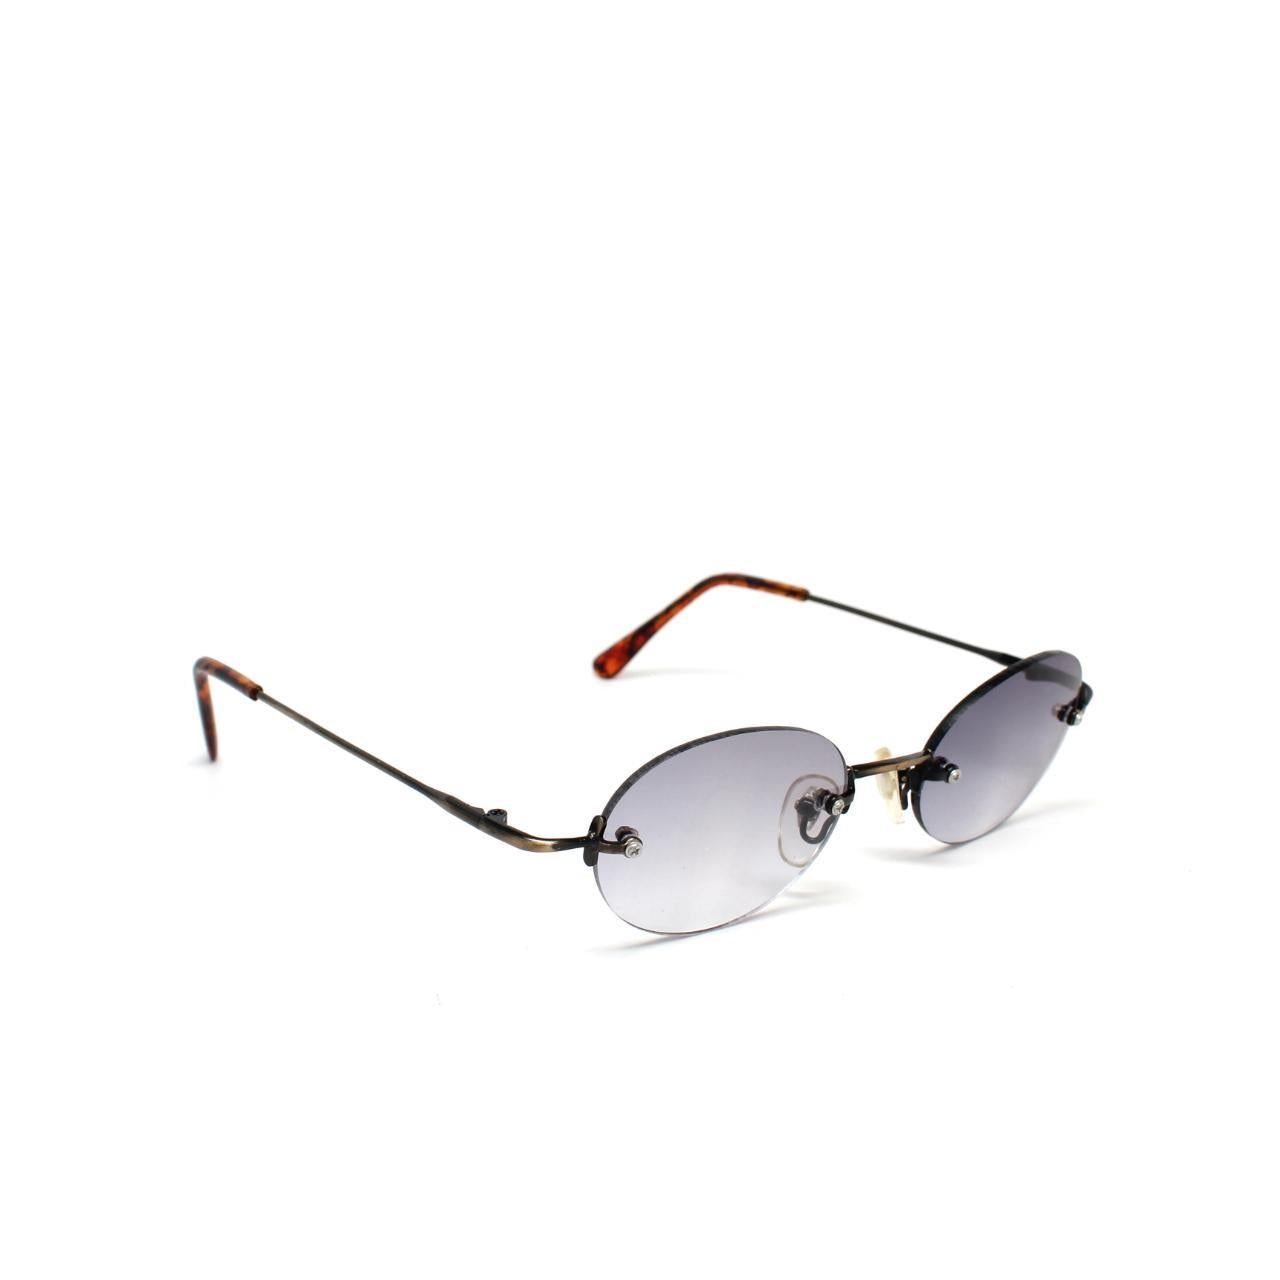 Vintage Small Size 1998 Rimless Oval Sunglasses - Bronze